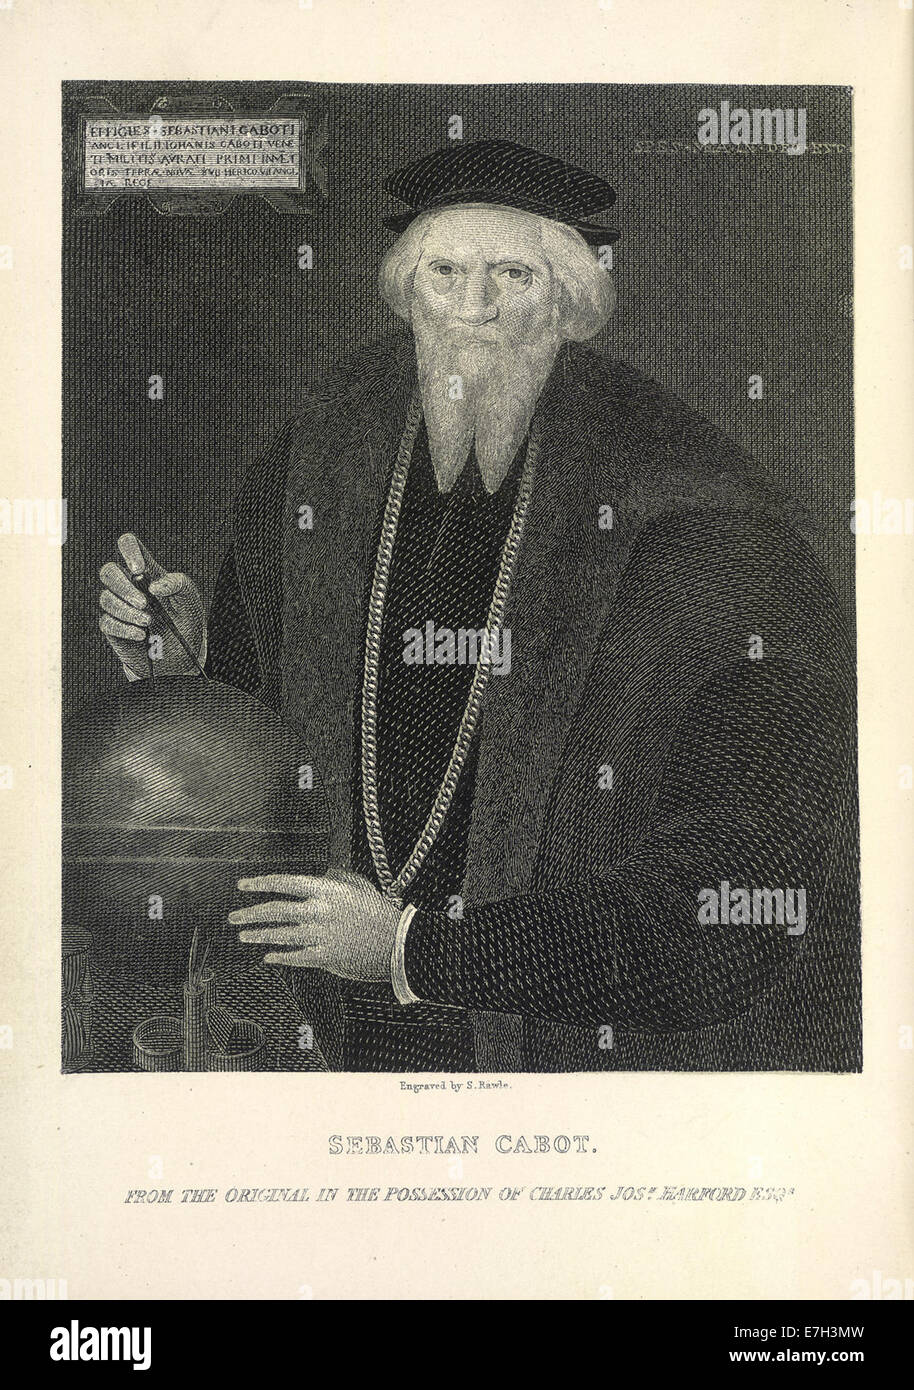 Sebastian Cabot - Nicholls, Sebastian Cabot (1869), frontespizio - BL Foto Stock